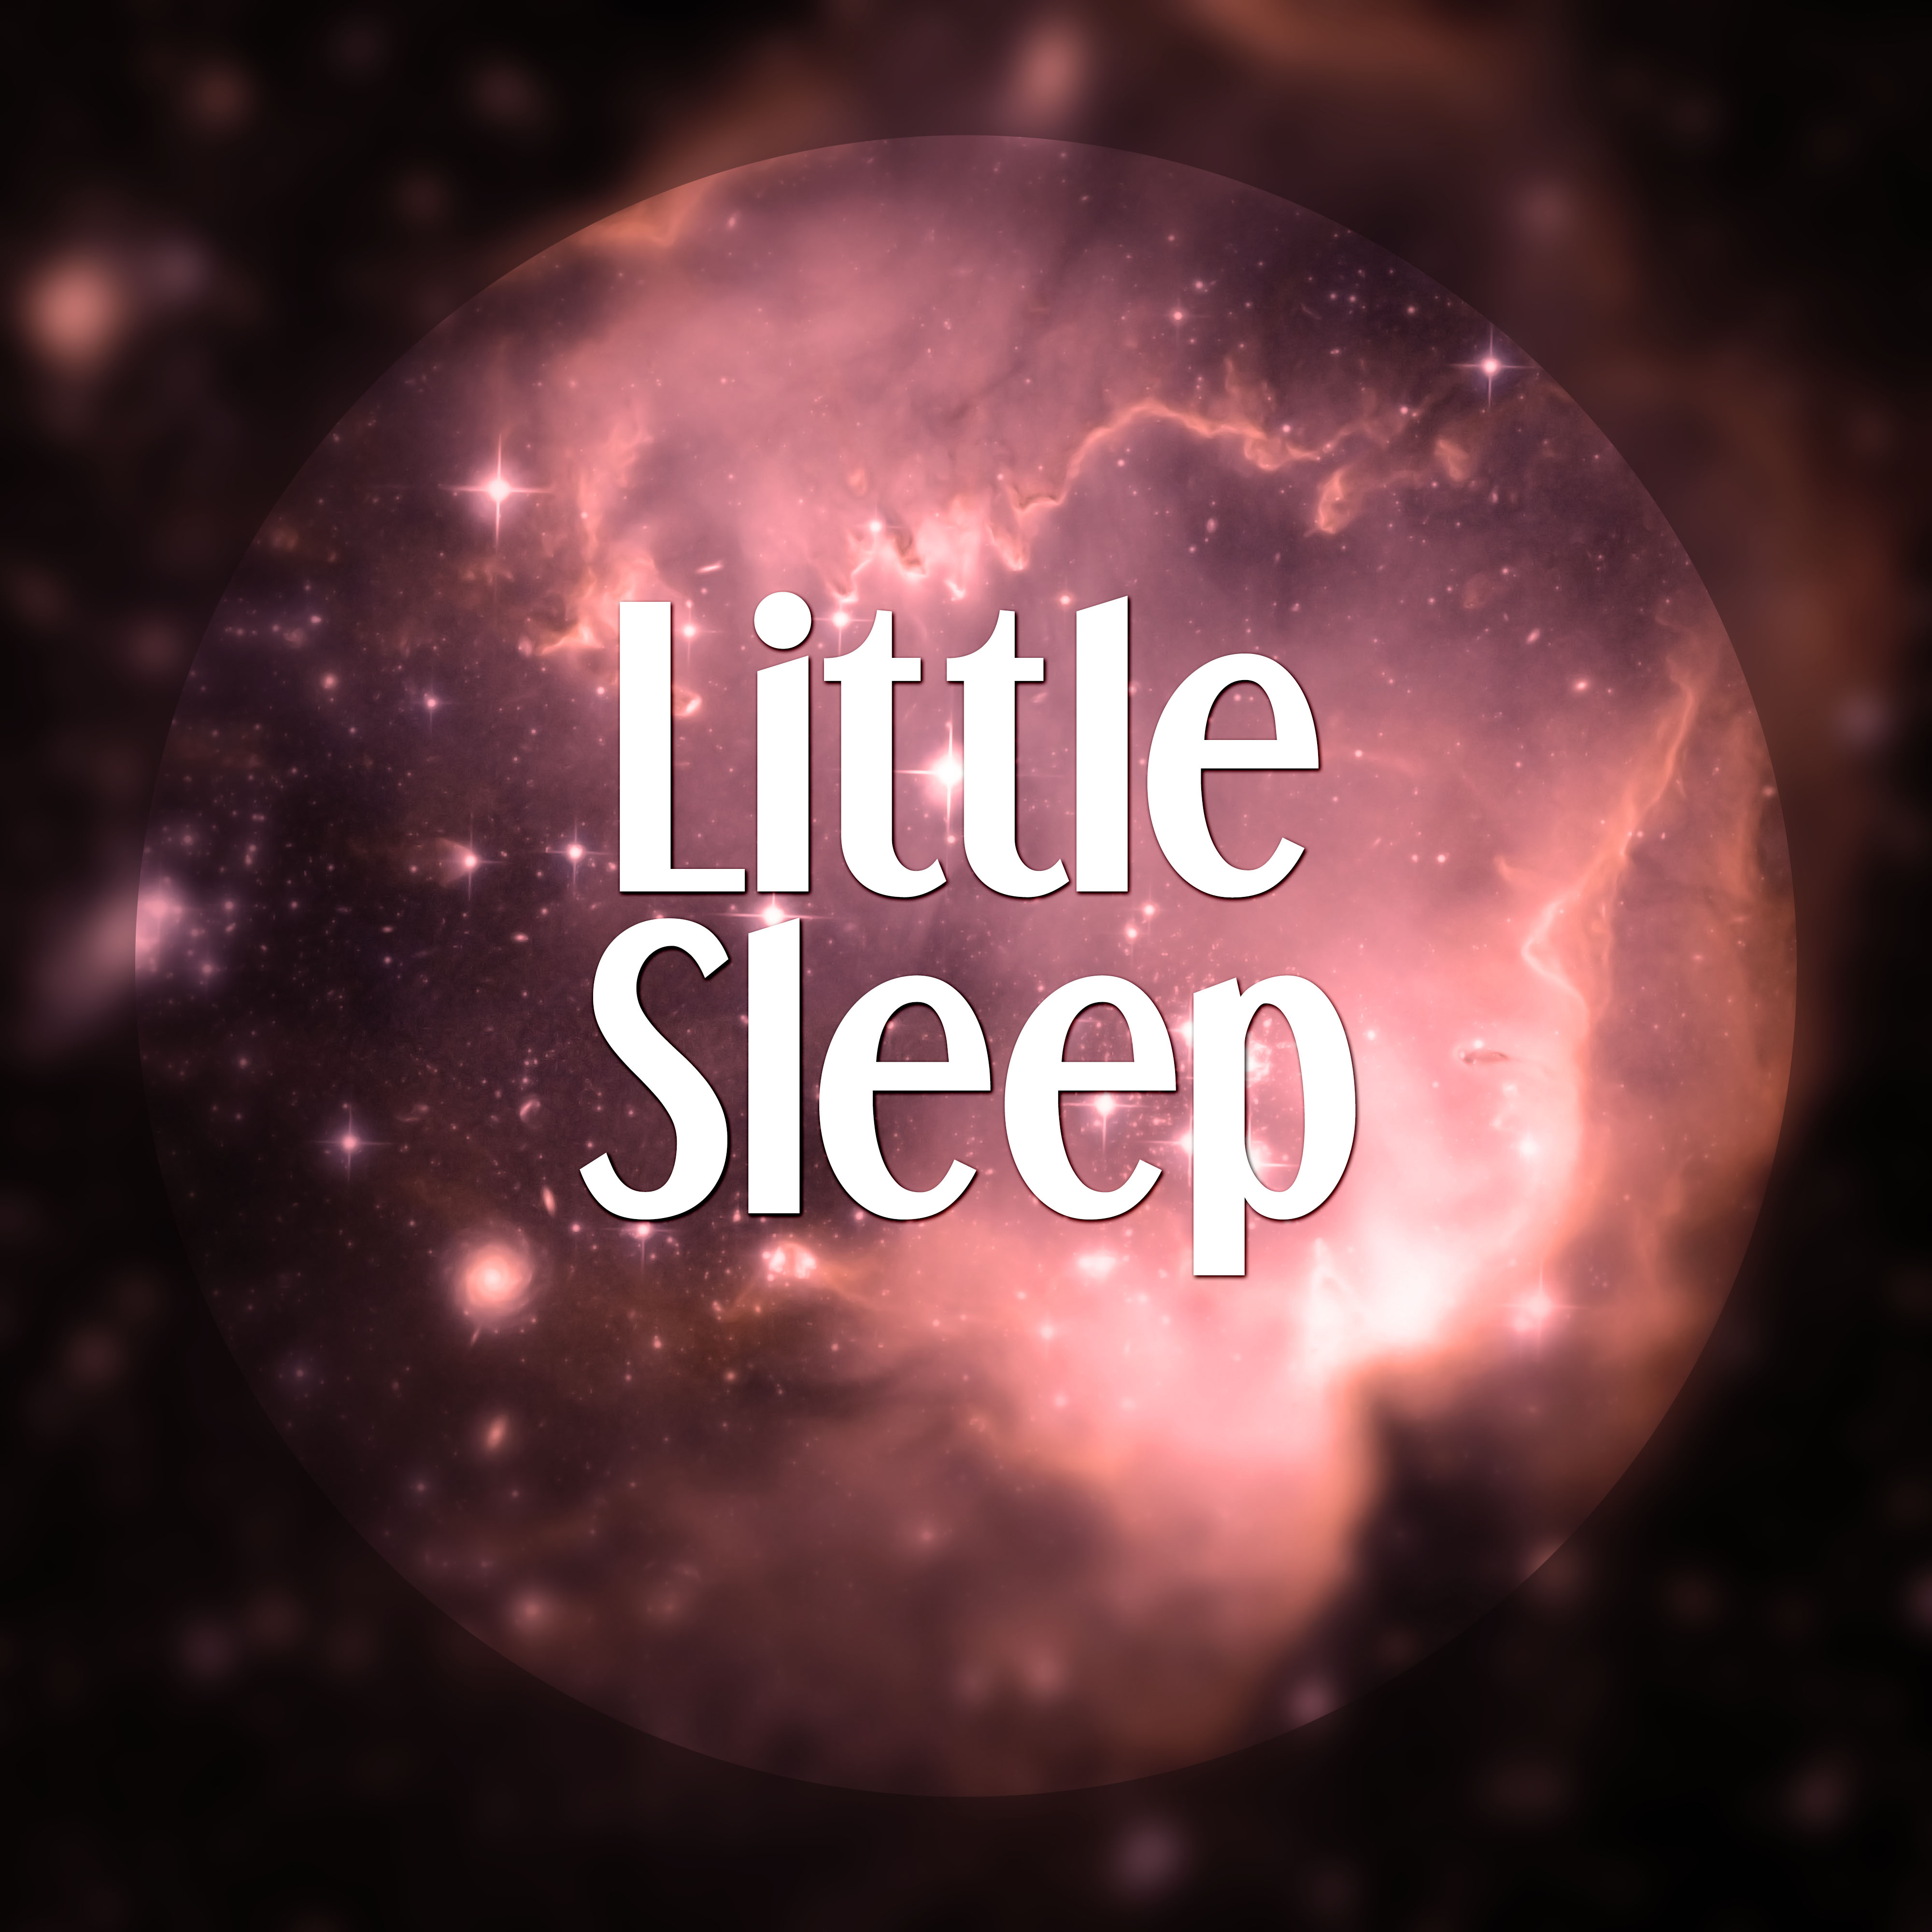 Little Sleep - Fast Sleep, Dream, Nap Nature Sounds, Calmness, Lullaby, Relaxation, Restful Sleep